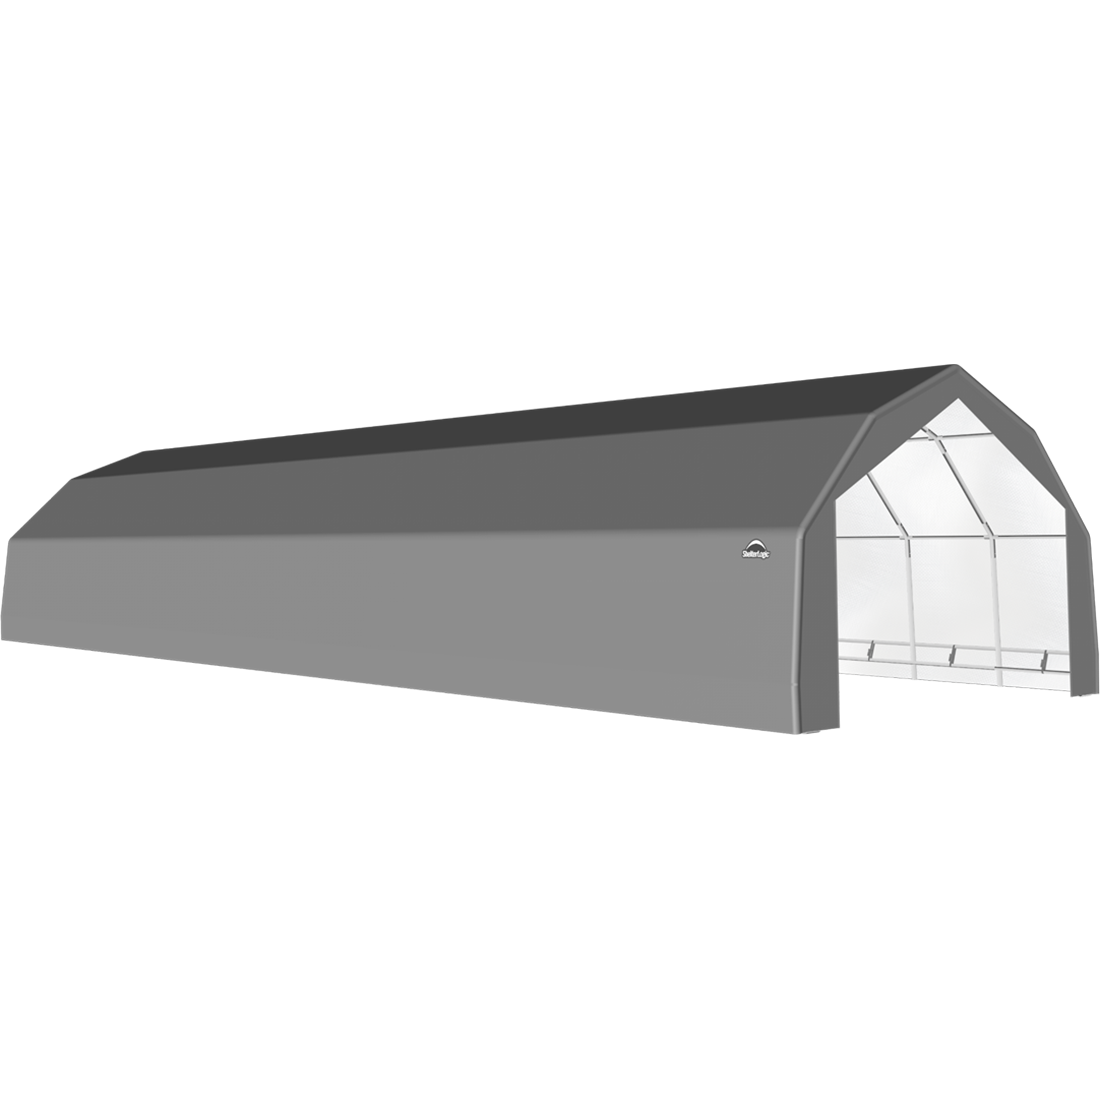 ShelterTech SP Series Barn Shelter, 20 ft. x 68 ft. x 12 ft. Heavy Duty PVC 14.5 oz. Gray